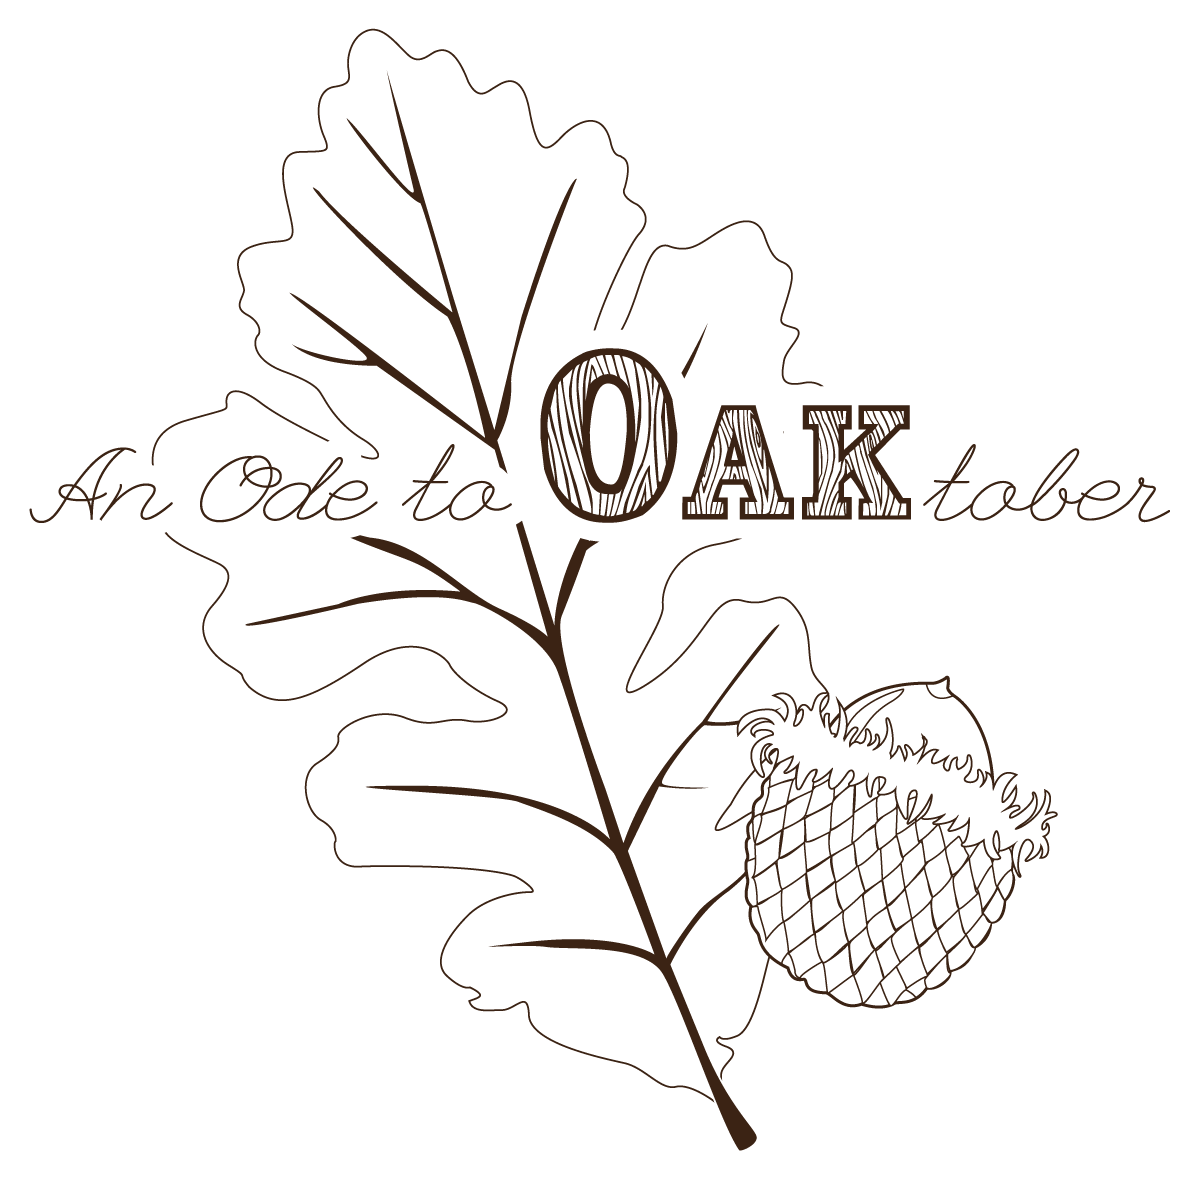 Oak leaf and acorn illustration.